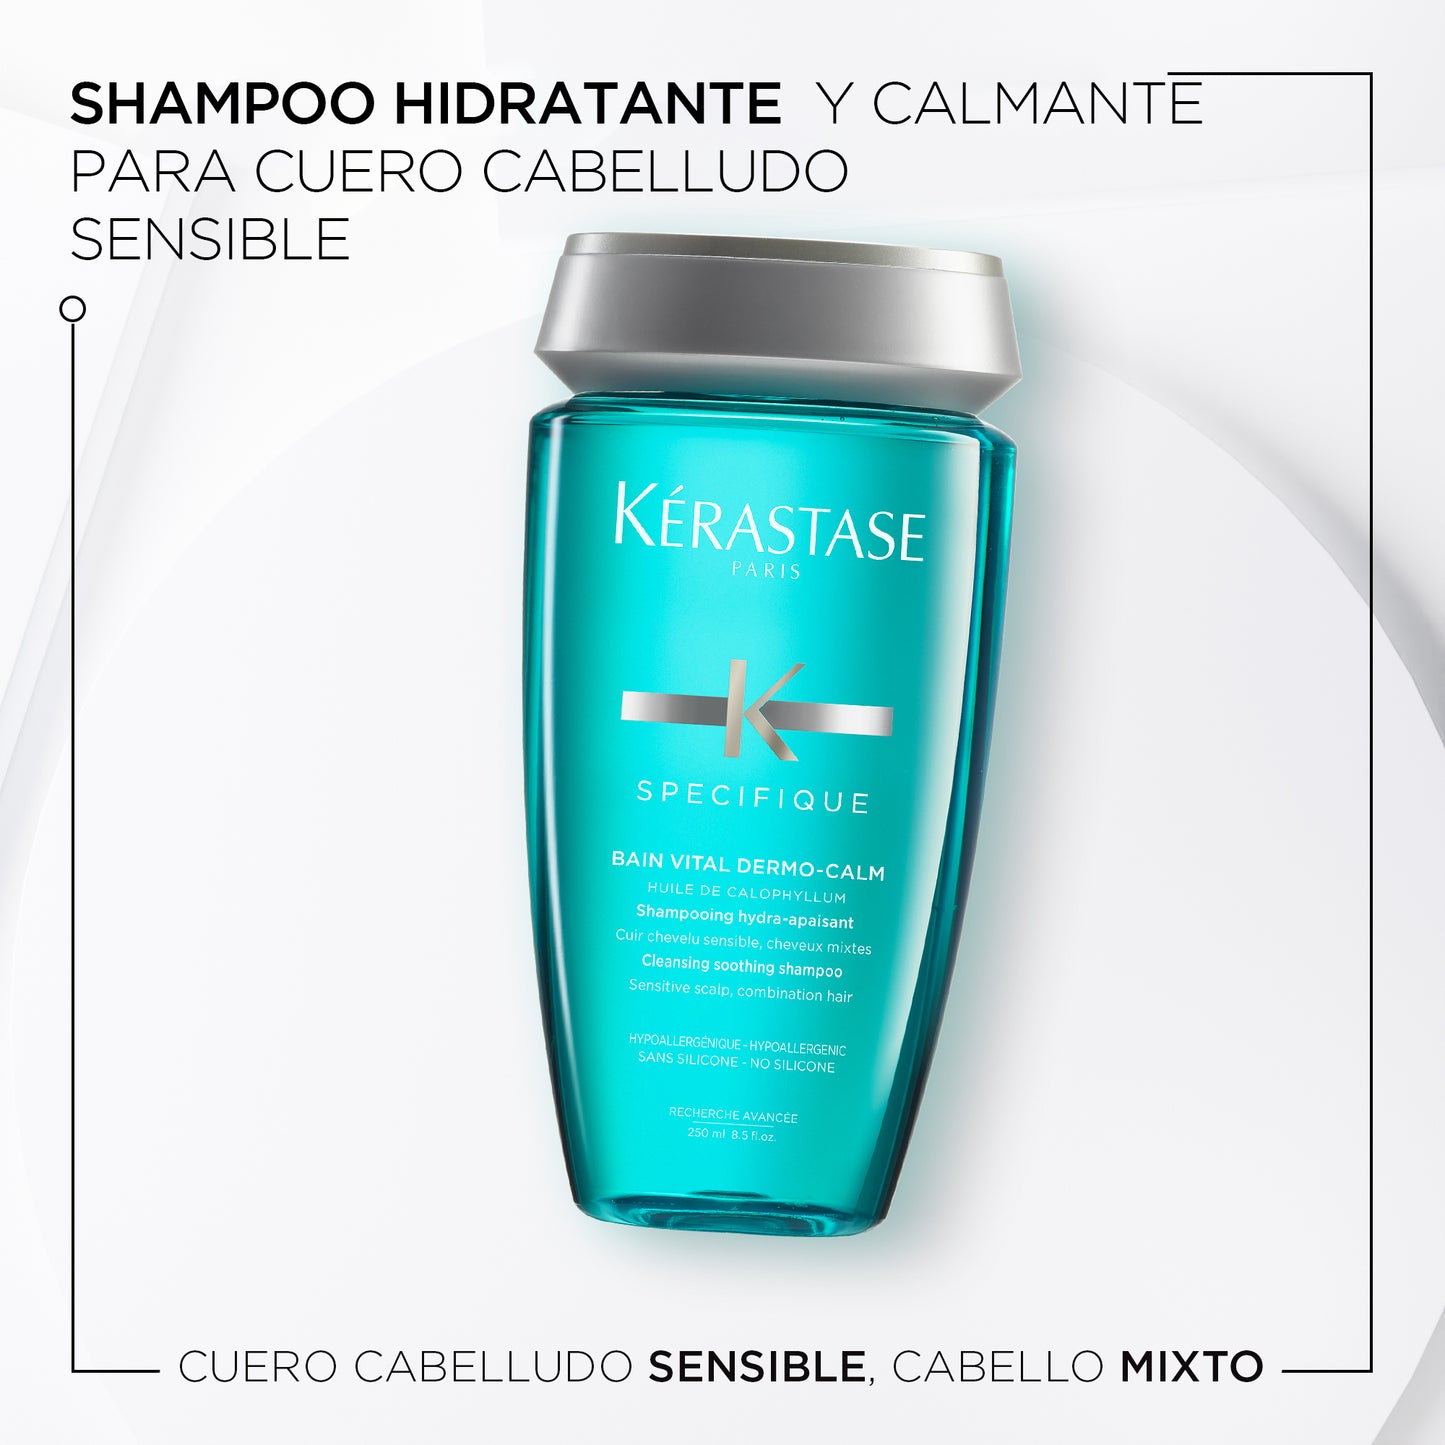 Shampoo Specifique para cuero cabelludo sensible Bain Vital Dermo Calm  250ml